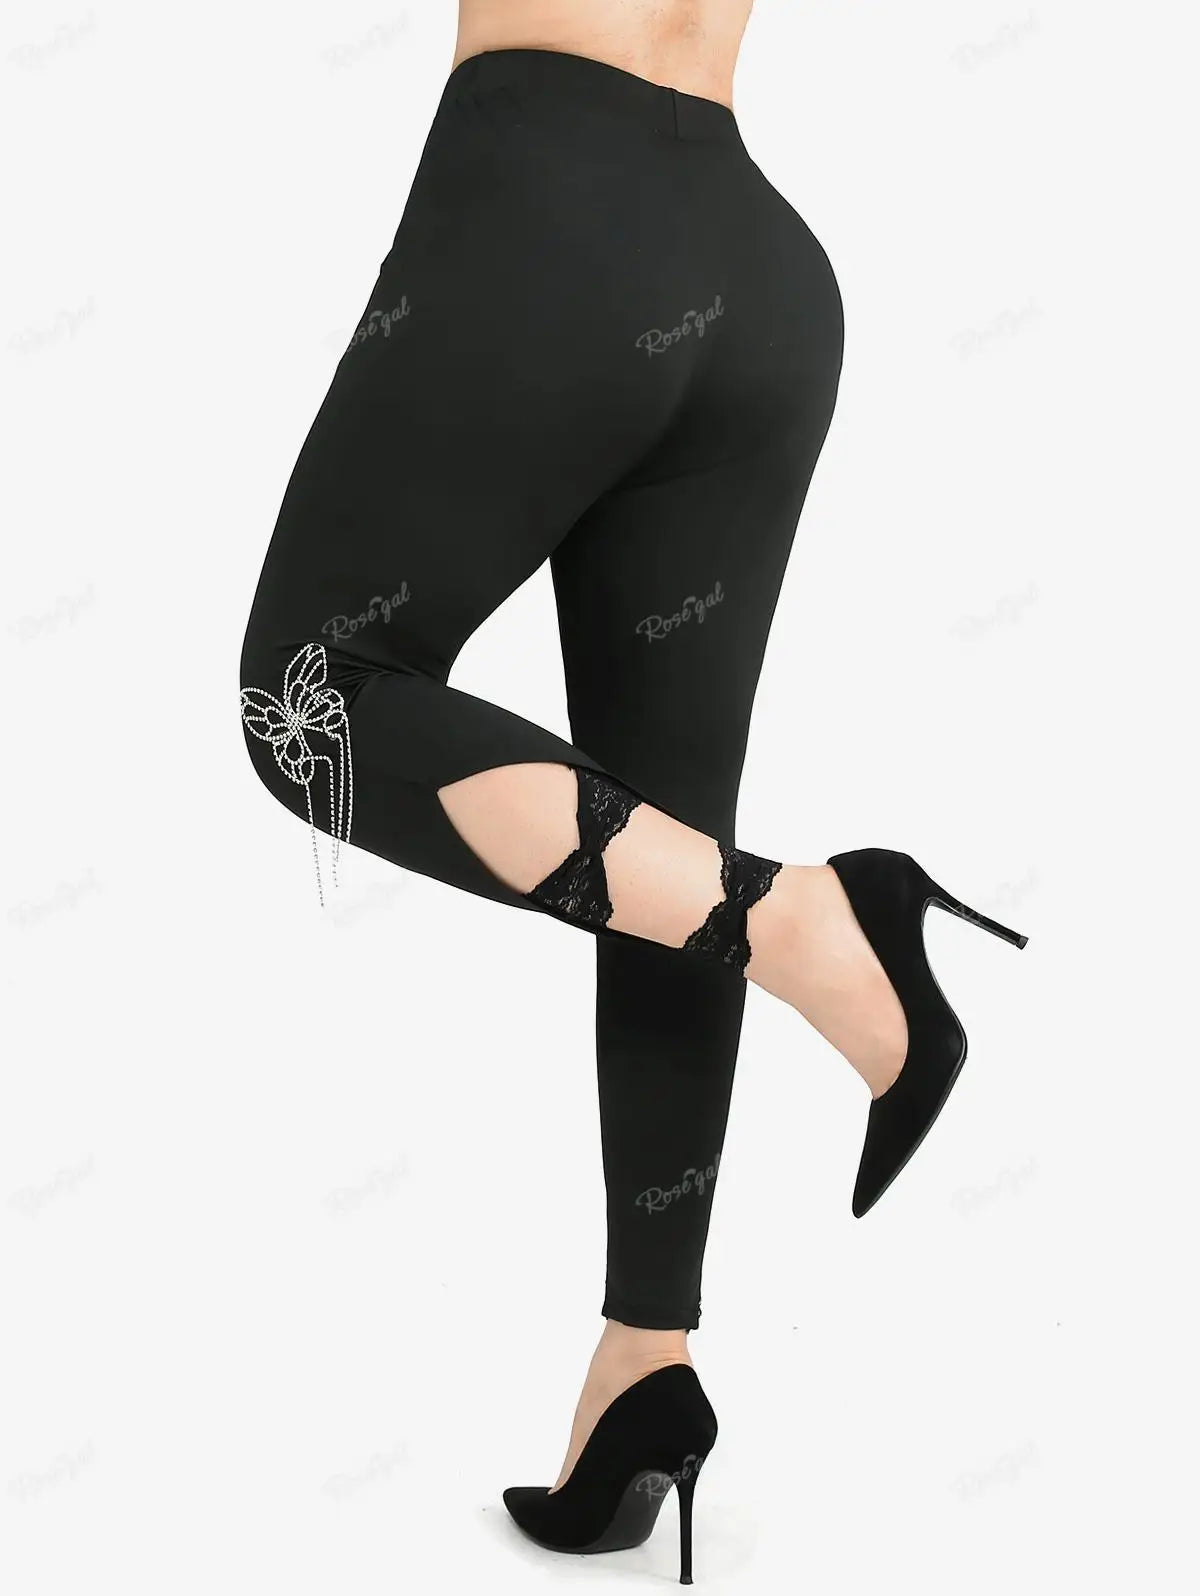 ROSEGAL Plus Size Full-Length Leggings with Pockets | Women's Casual Daily Sportswear | Elastic Waist Skinny Pencil Pants